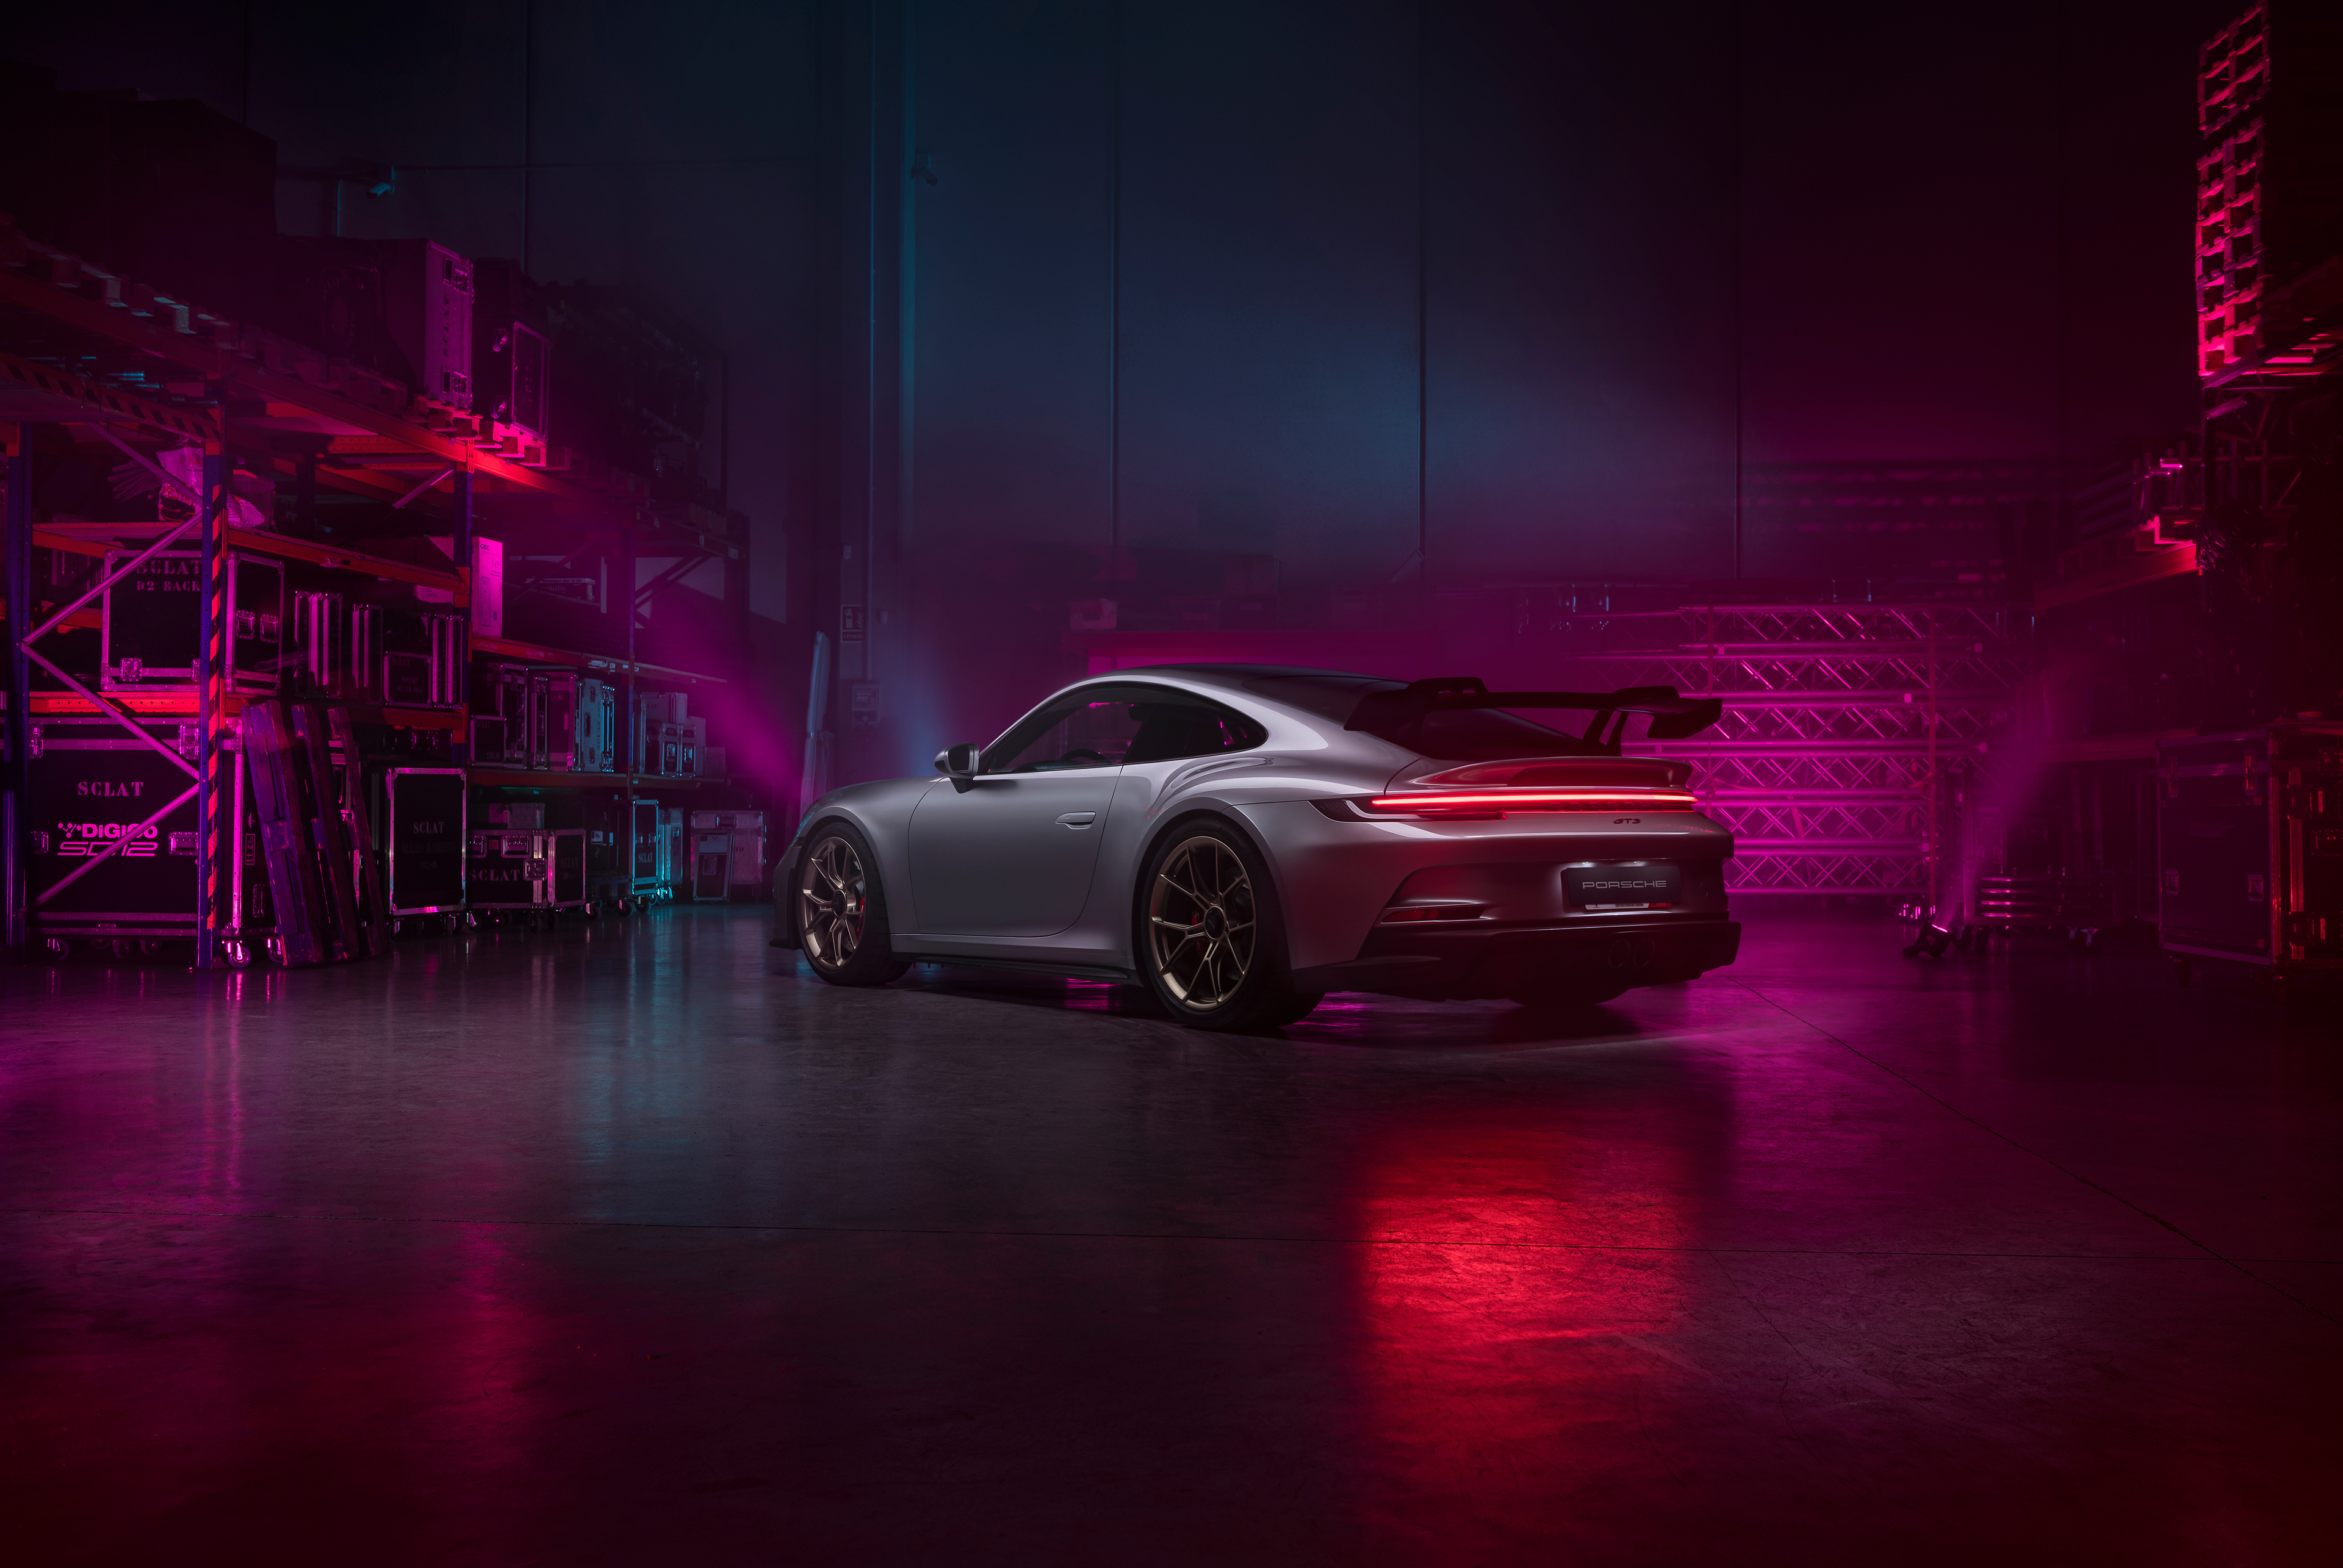 2022 Cyberpunk Porsche 992 GT3 4k, HD Cars, 4k Wallpaper, Image, Background, Photo and Picture